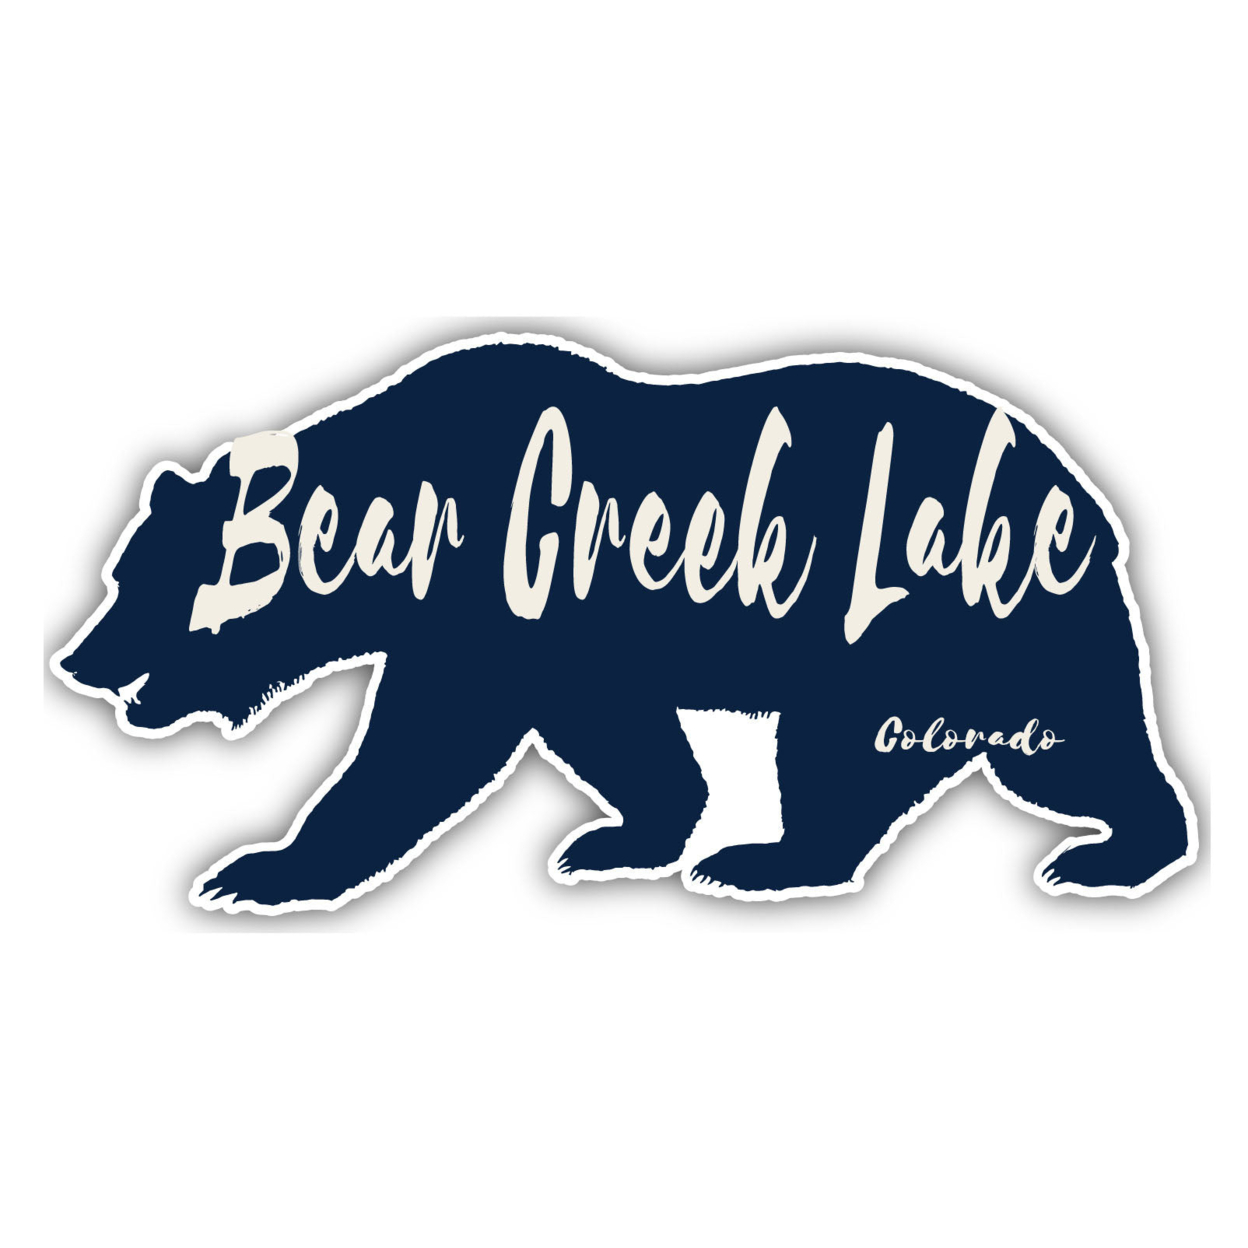 Bear Creek Lake Colorado Souvenir Decorative Stickers (Choose Theme And Size) - 4-Pack, 8-Inch, Bear